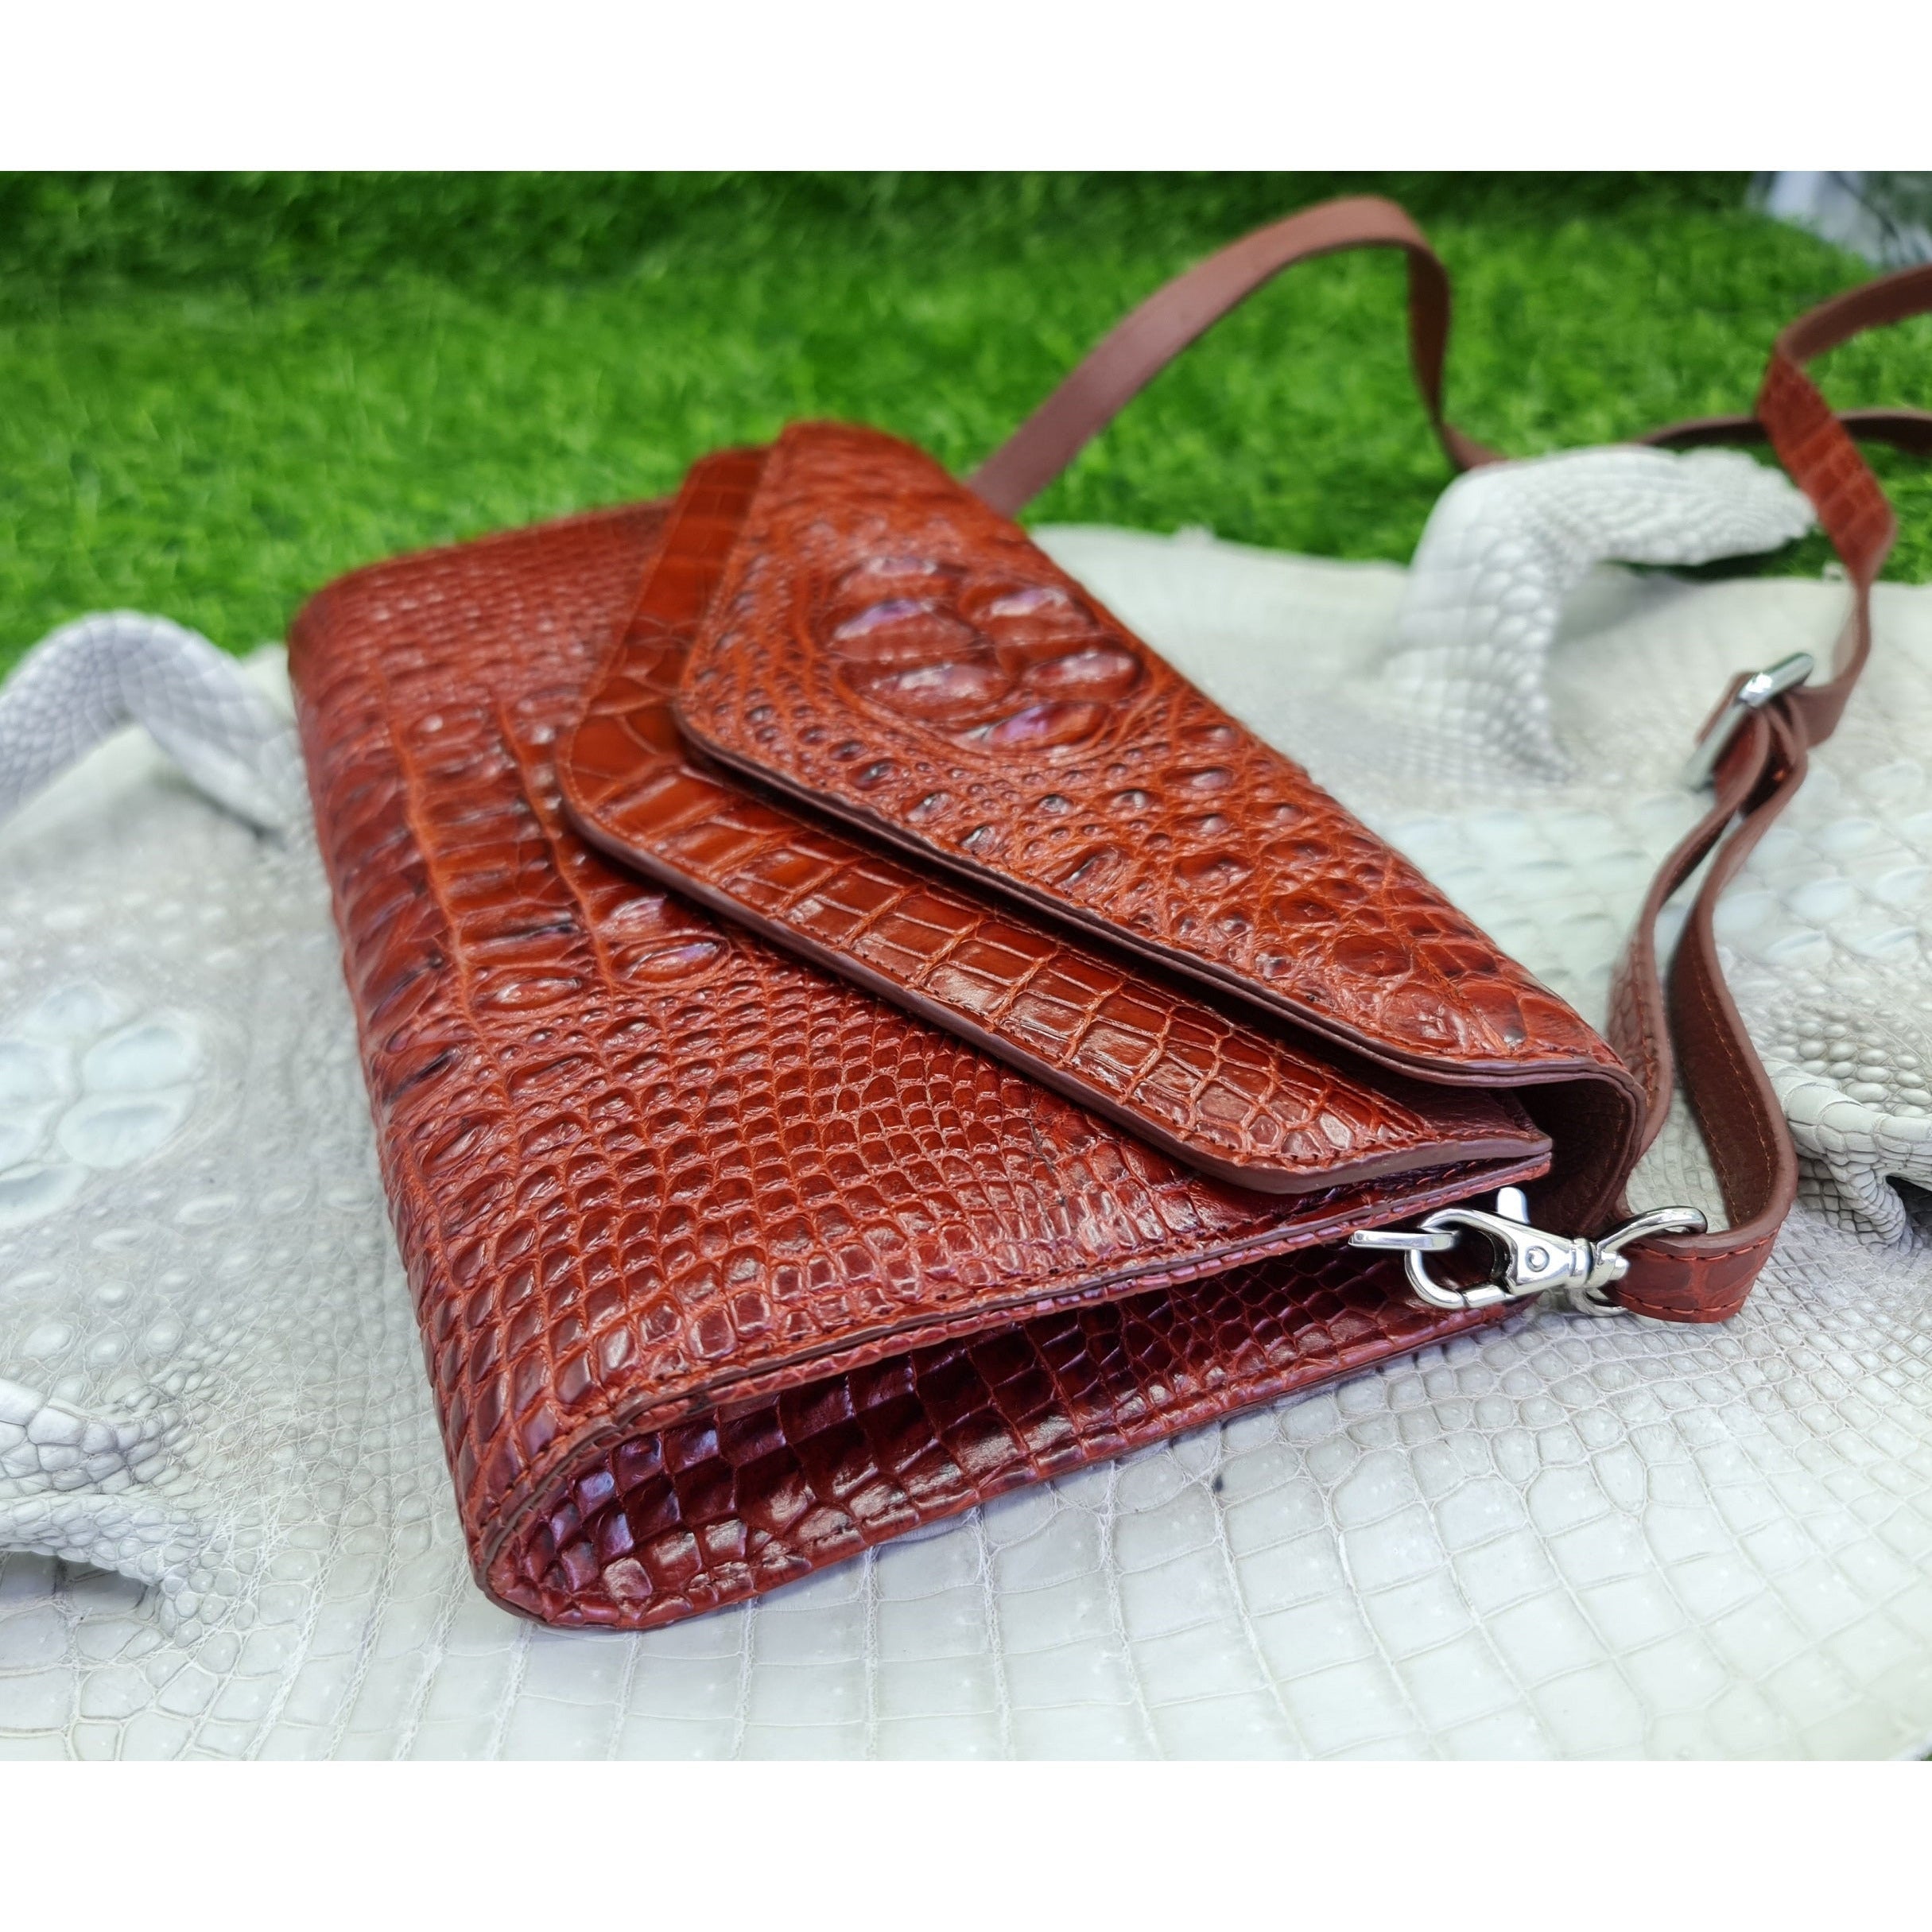 Womens Leather Alligator Handbag Handmade Luxury Leather Bag - Work Bag Women - Brown Leather Satchel Purse XACH-08 - Vinacreations